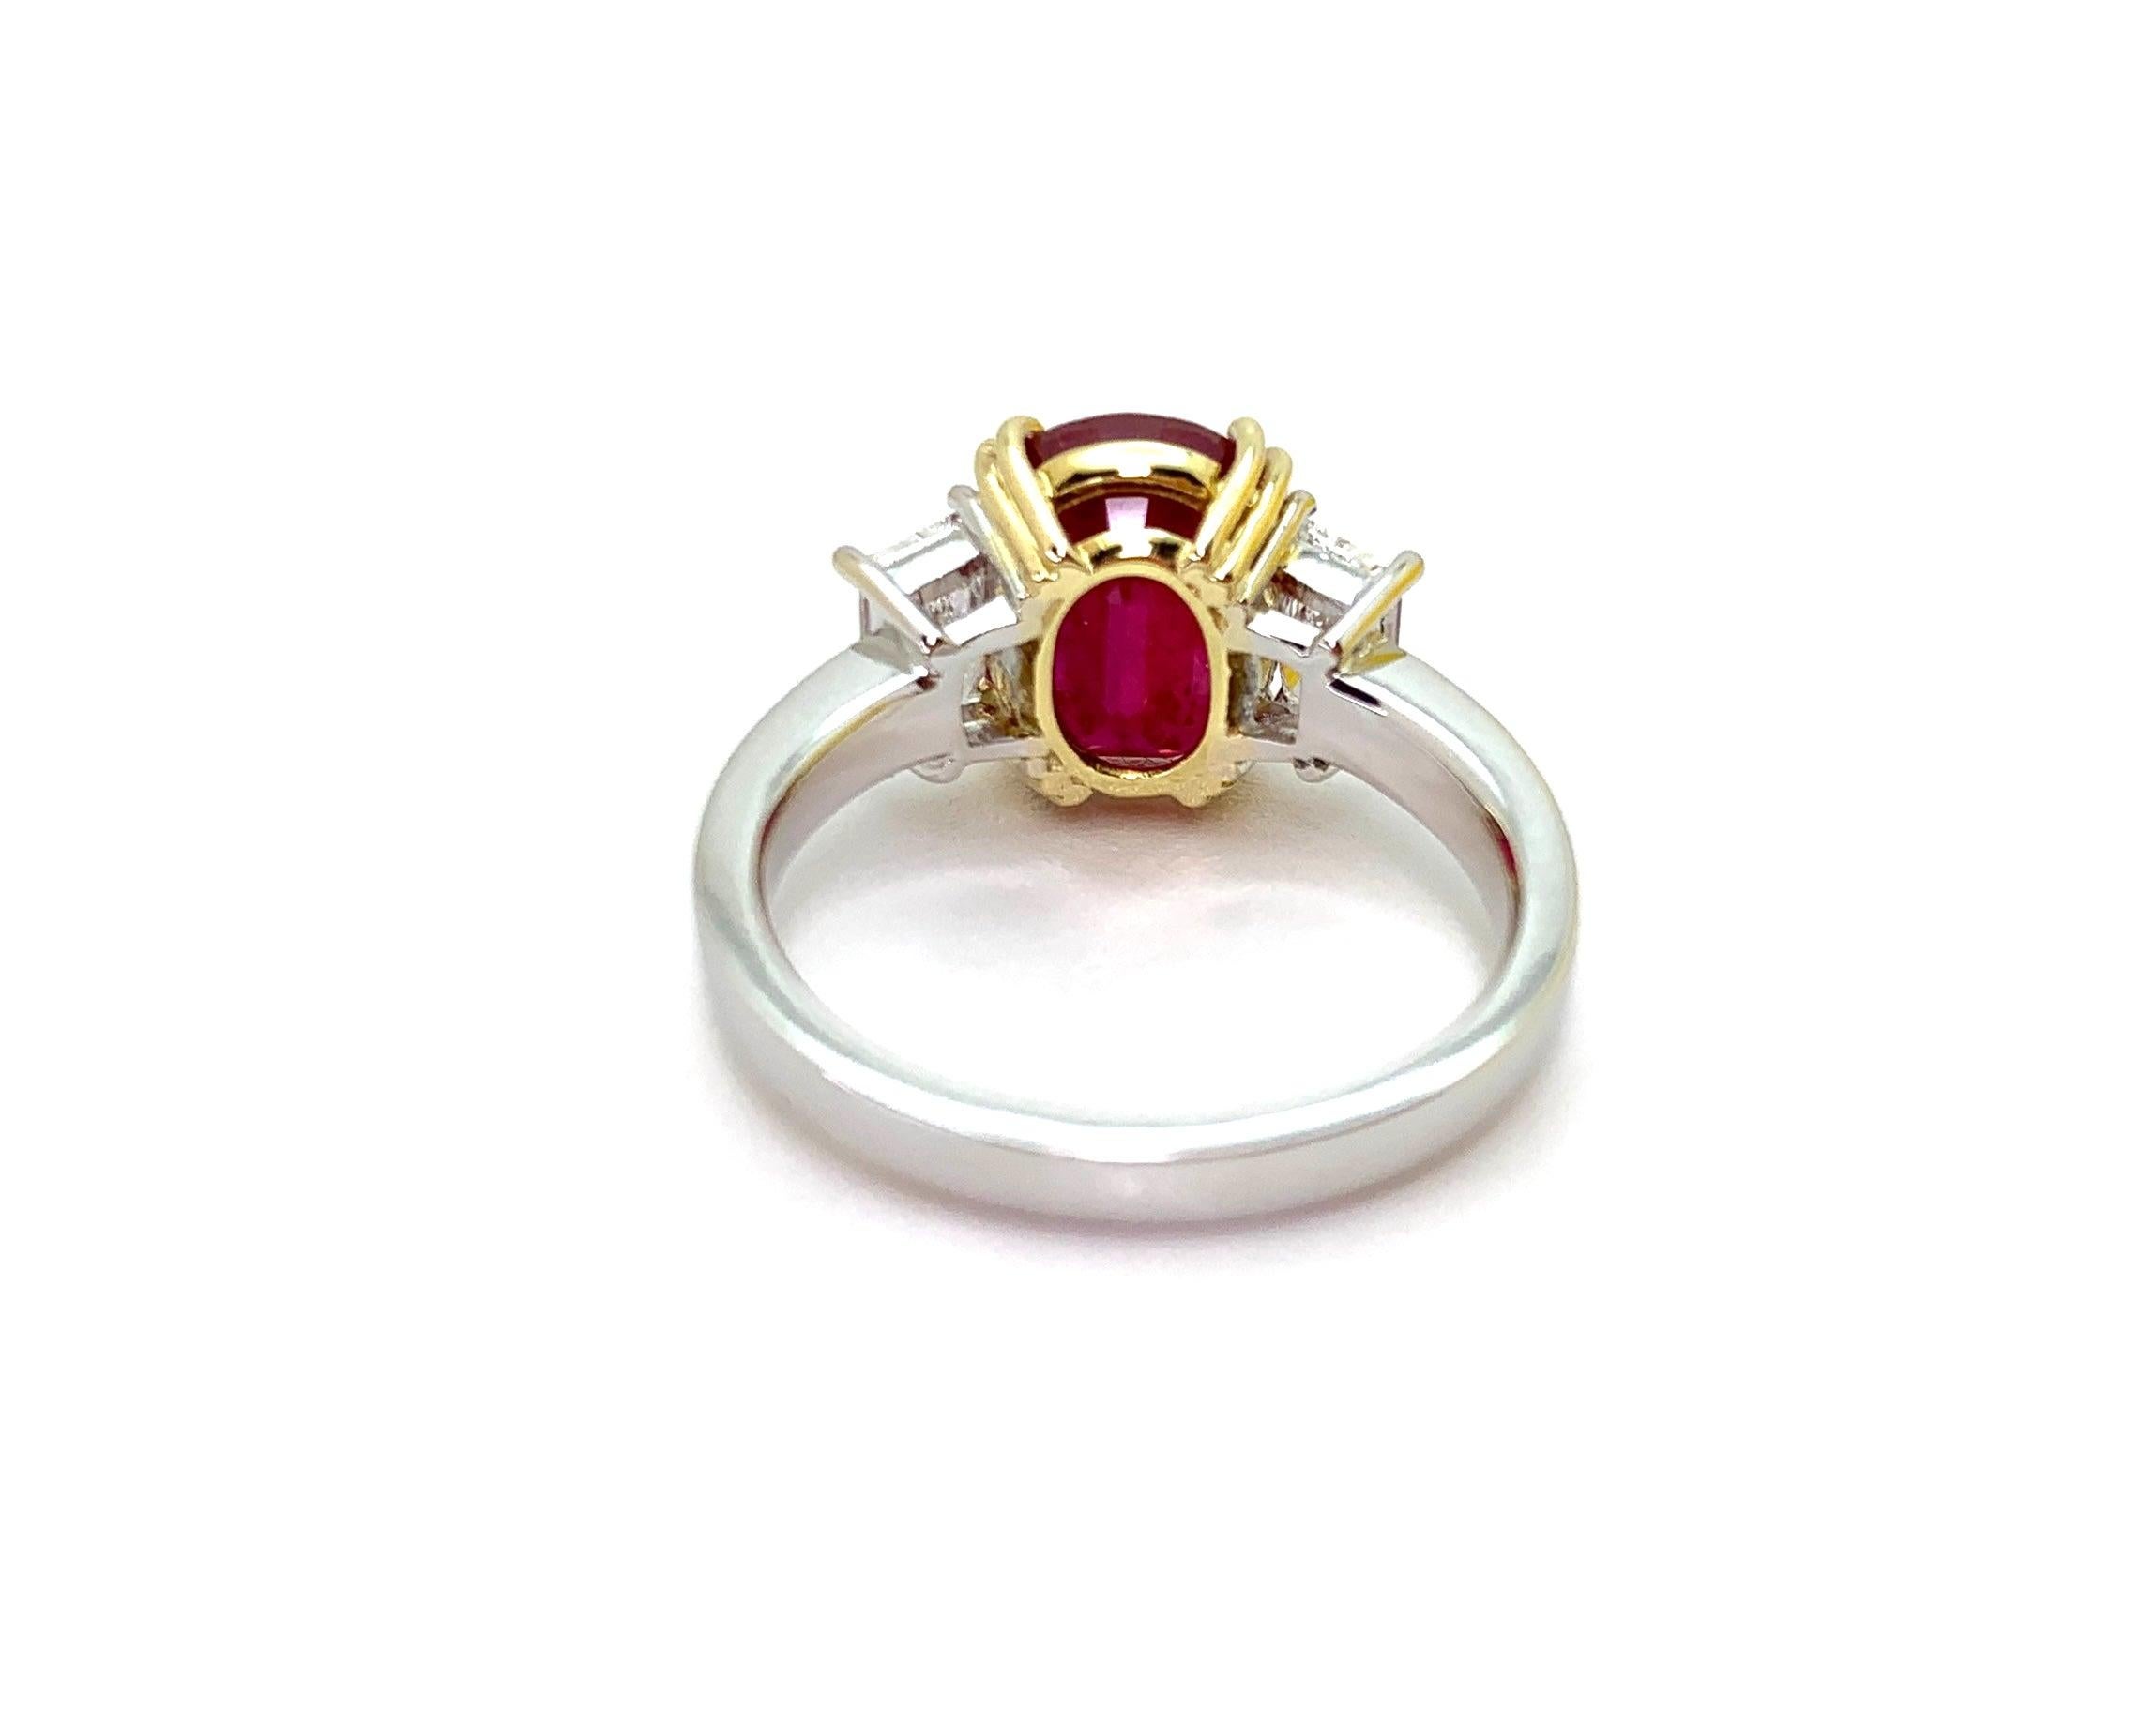 3 carat ruby engagement ring